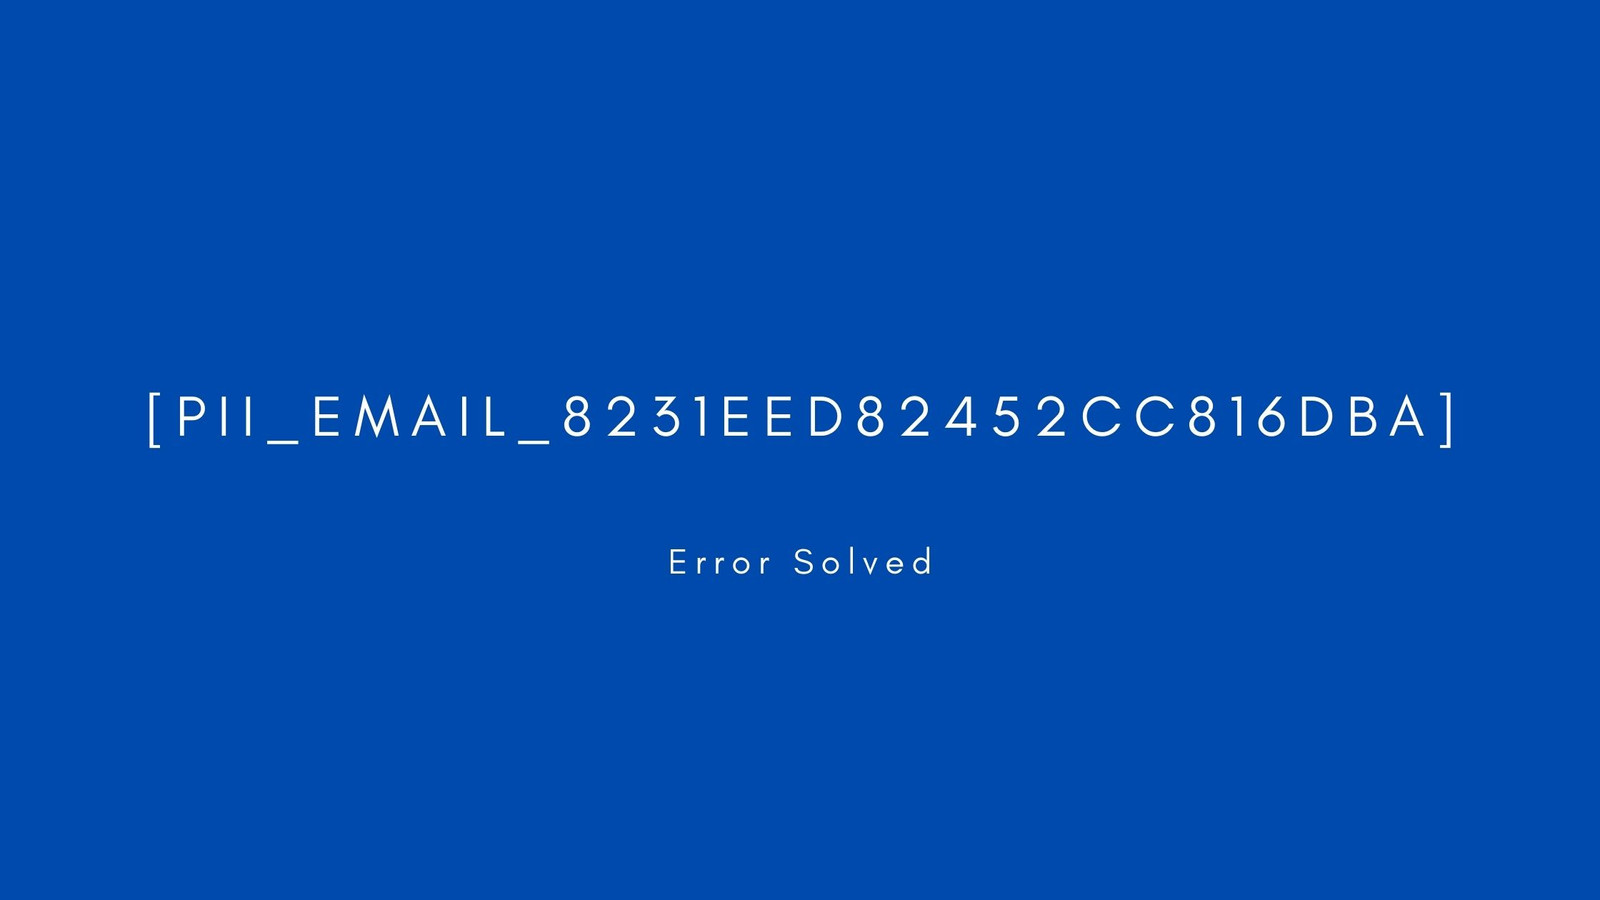 [pii_email_8231eed82452cc816dba] Error resolved